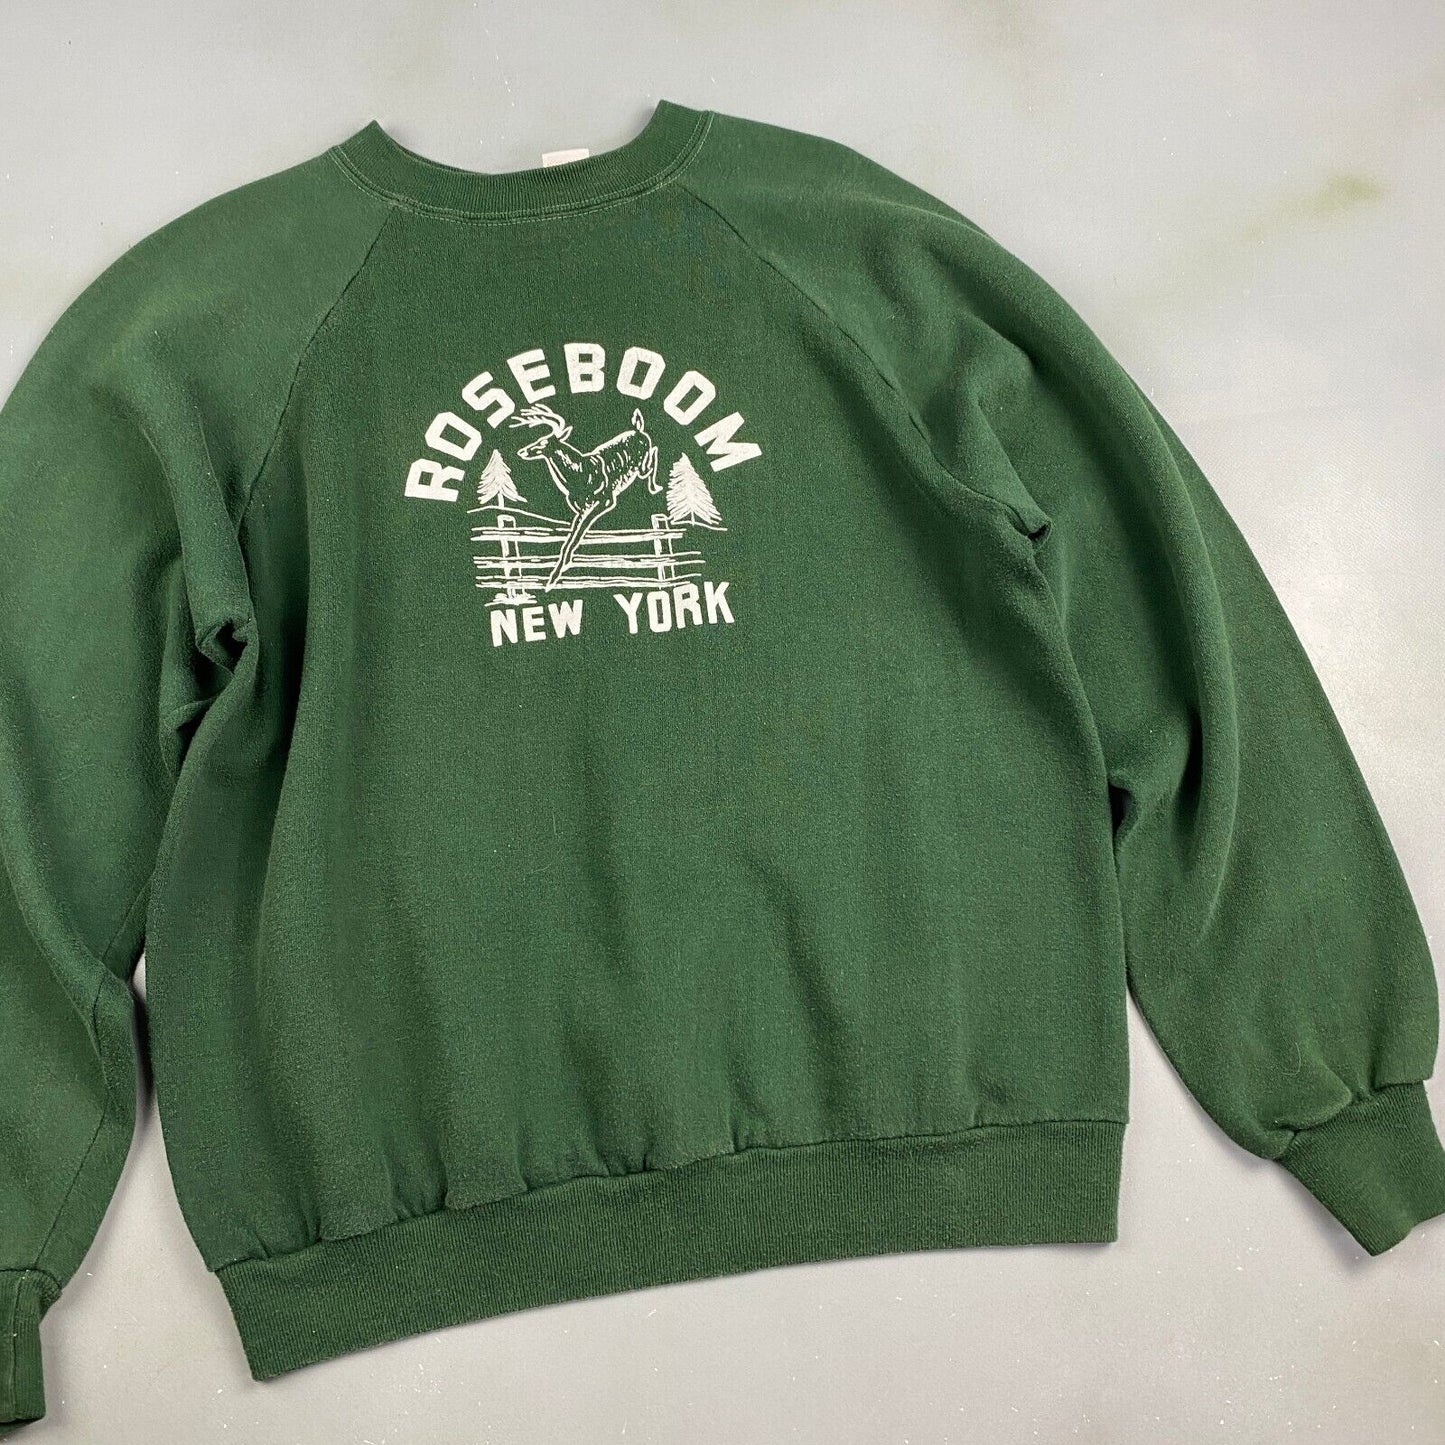 VINTAGE 70s/80s Roseboom New York Crewneck Sweater sz Large Adult Men